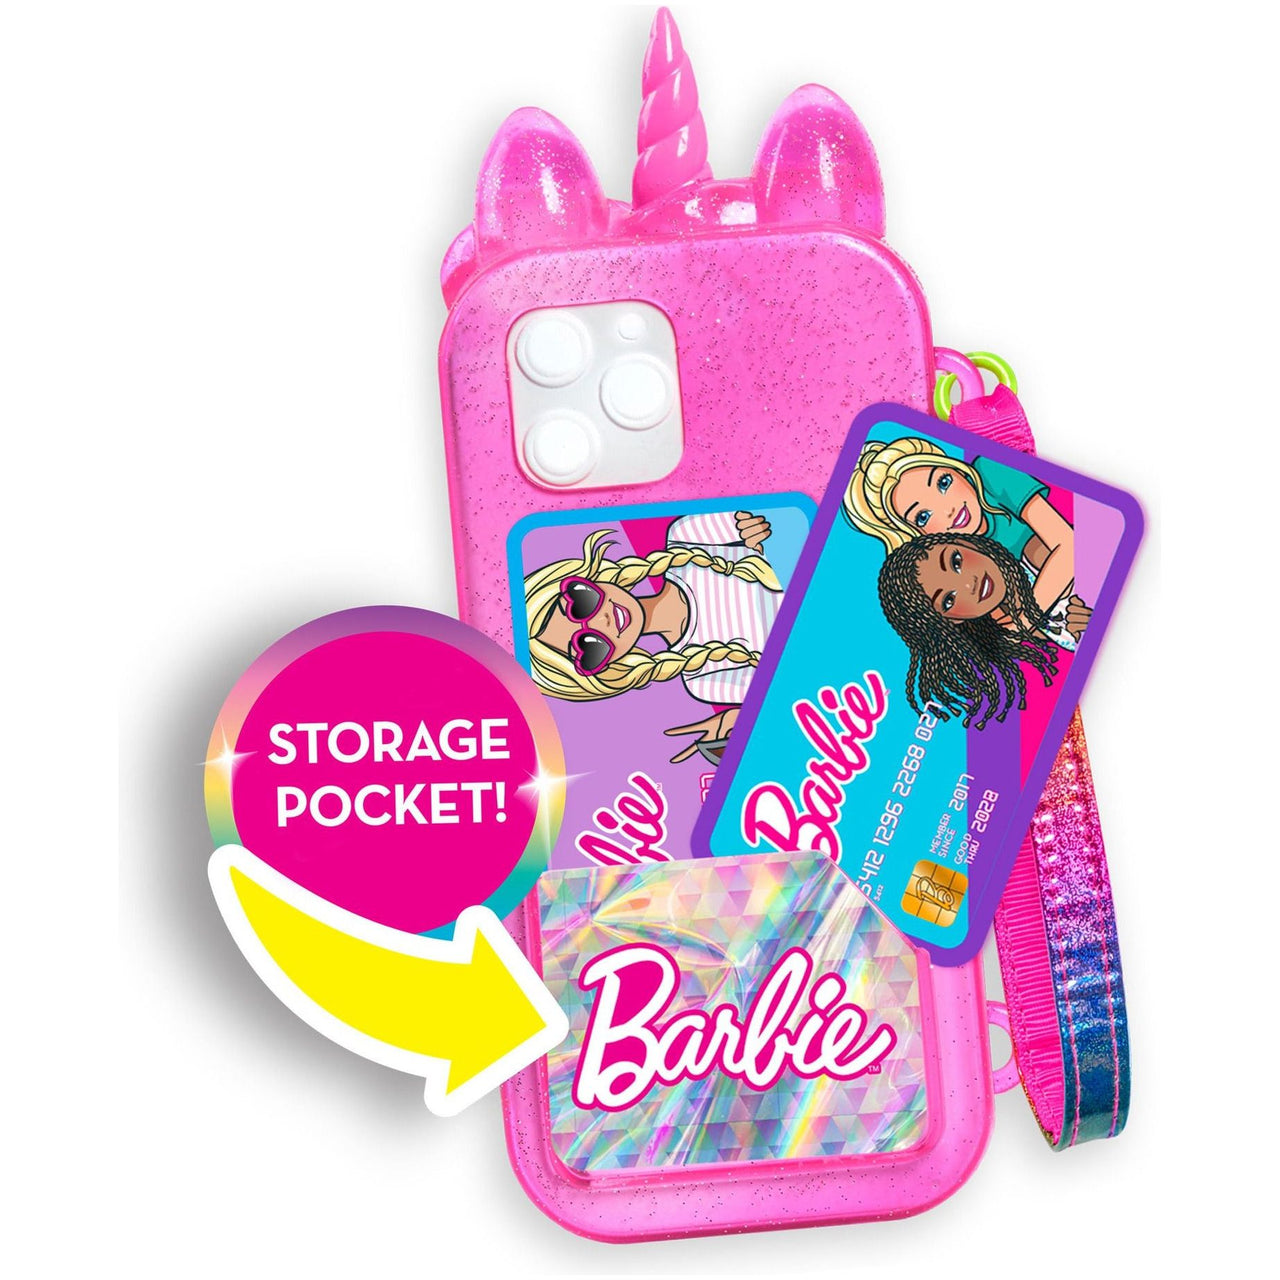 Barbie Fashion Phone Set Barbie